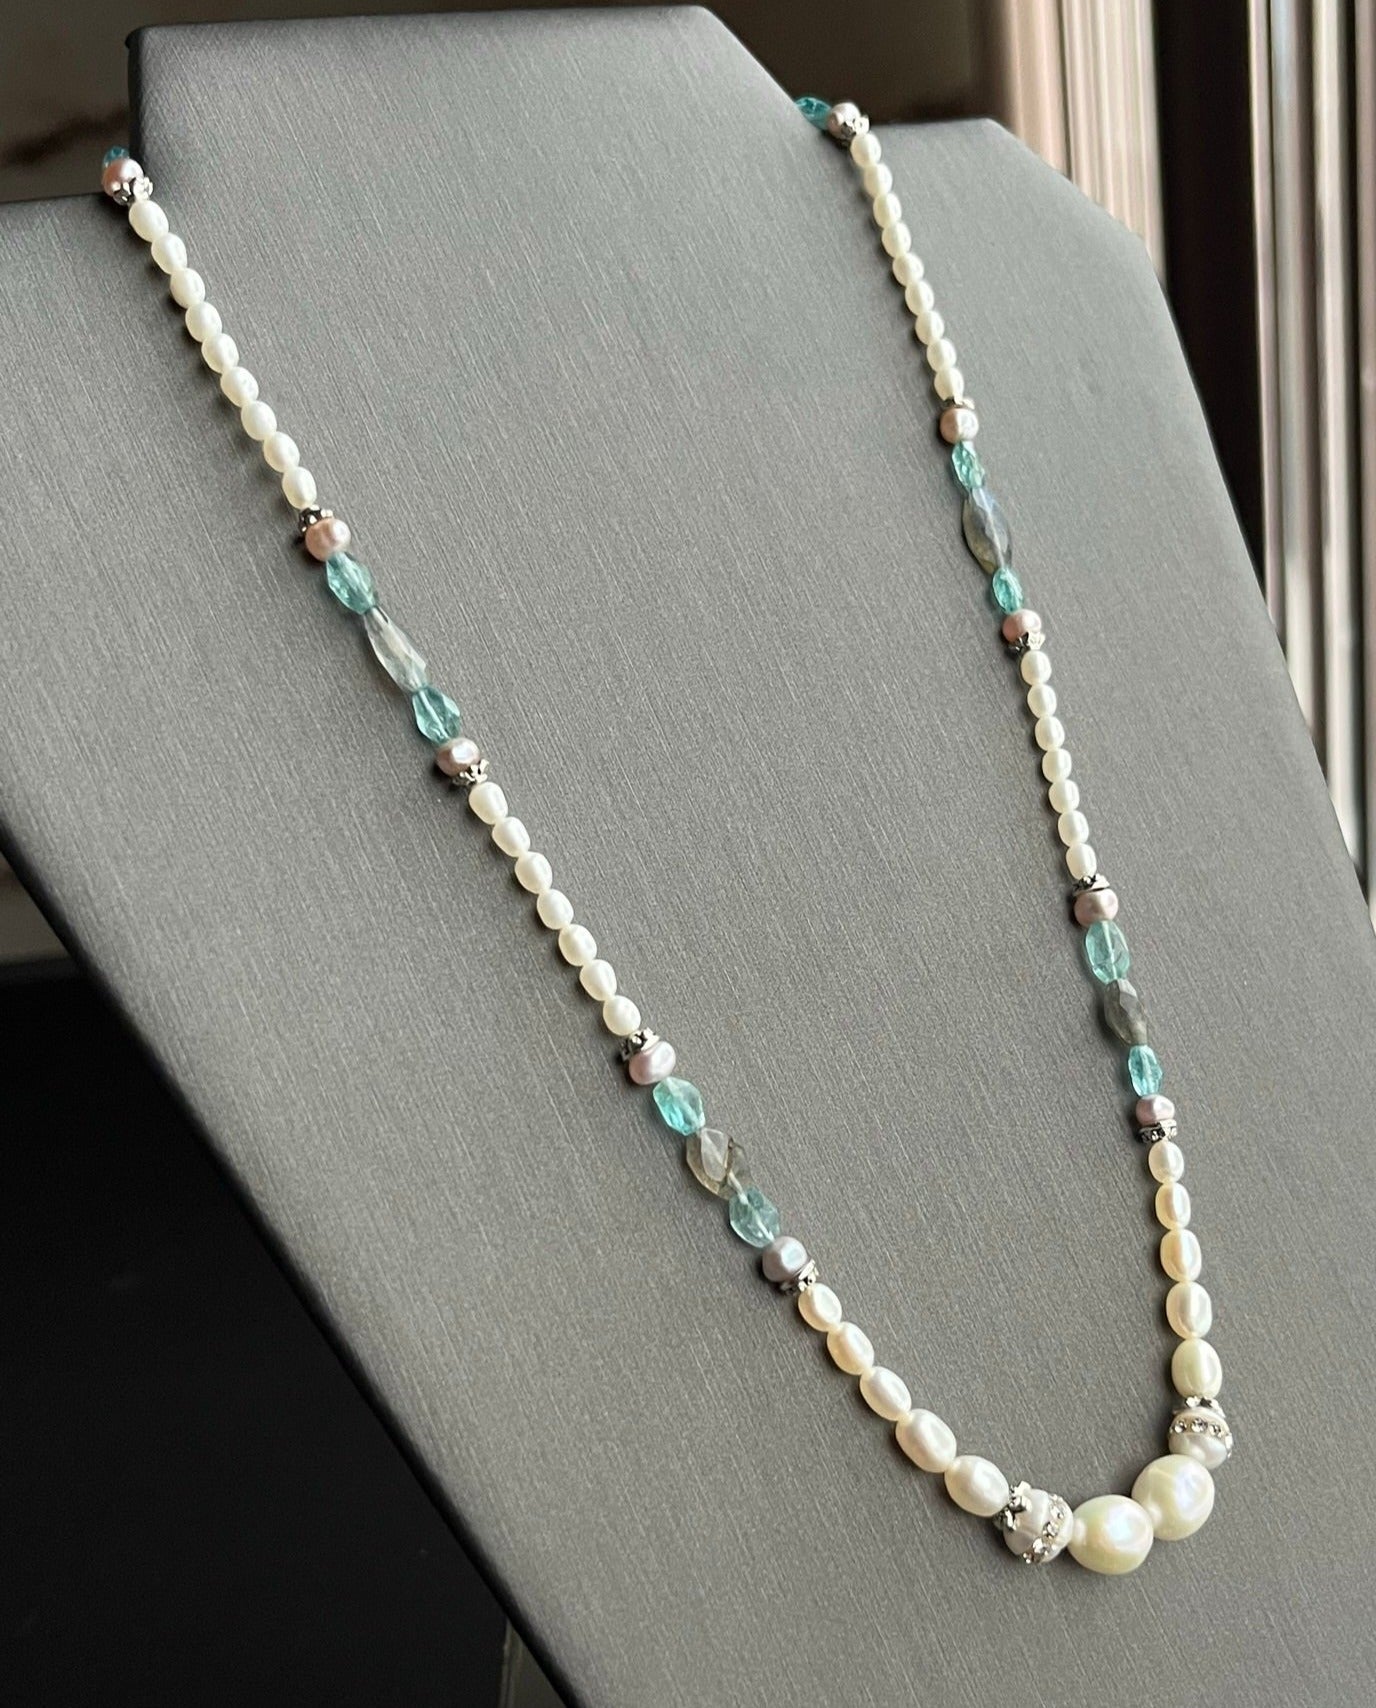 Pearl, Apatite, and Labradorite Necklace, Arctic Fire Designs